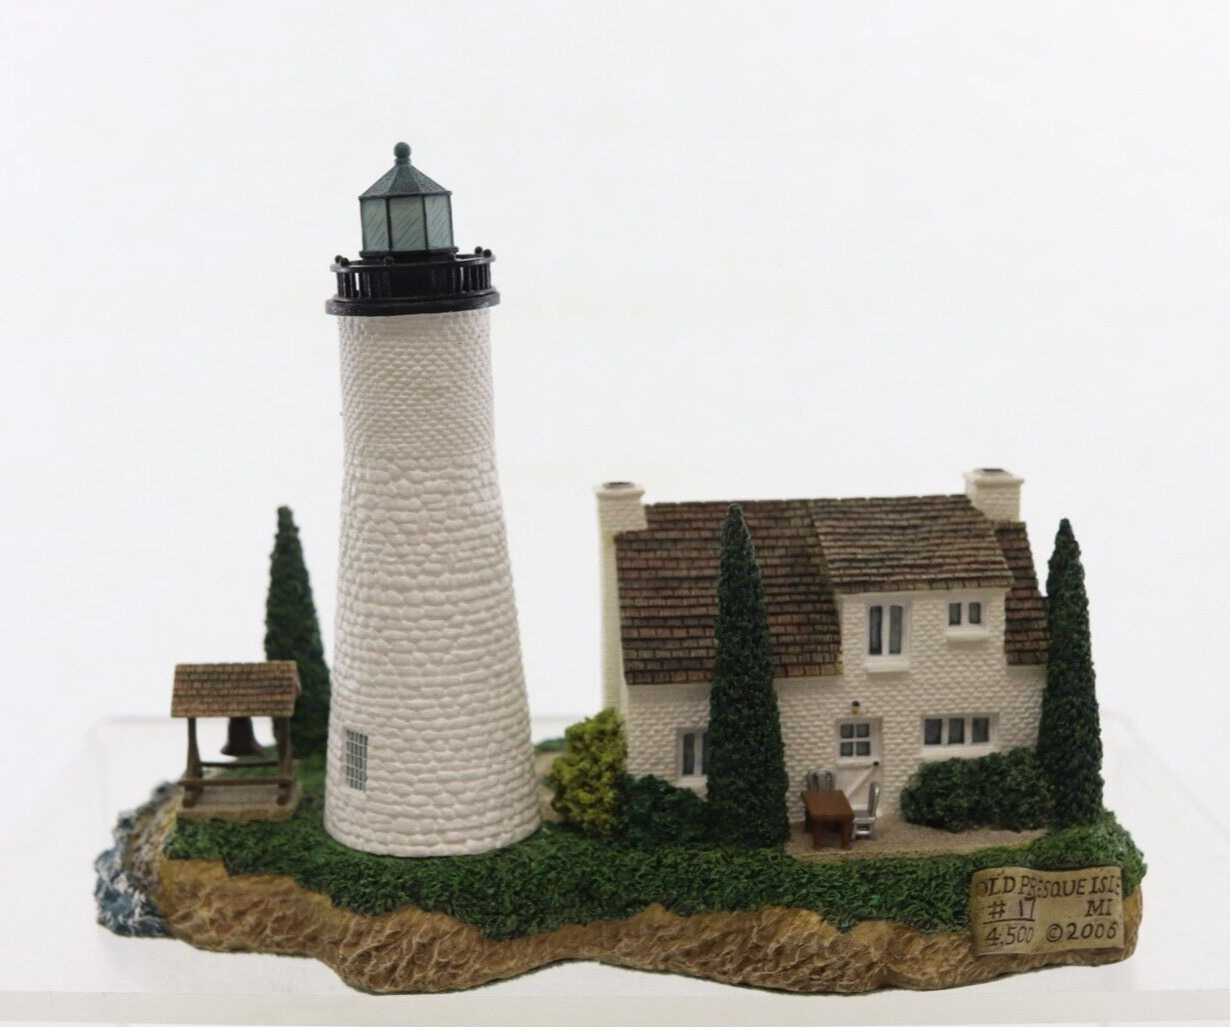 Harbour Lights Lighthouse Old Presque Isle Michigan #332 Box + CoA #17/4500